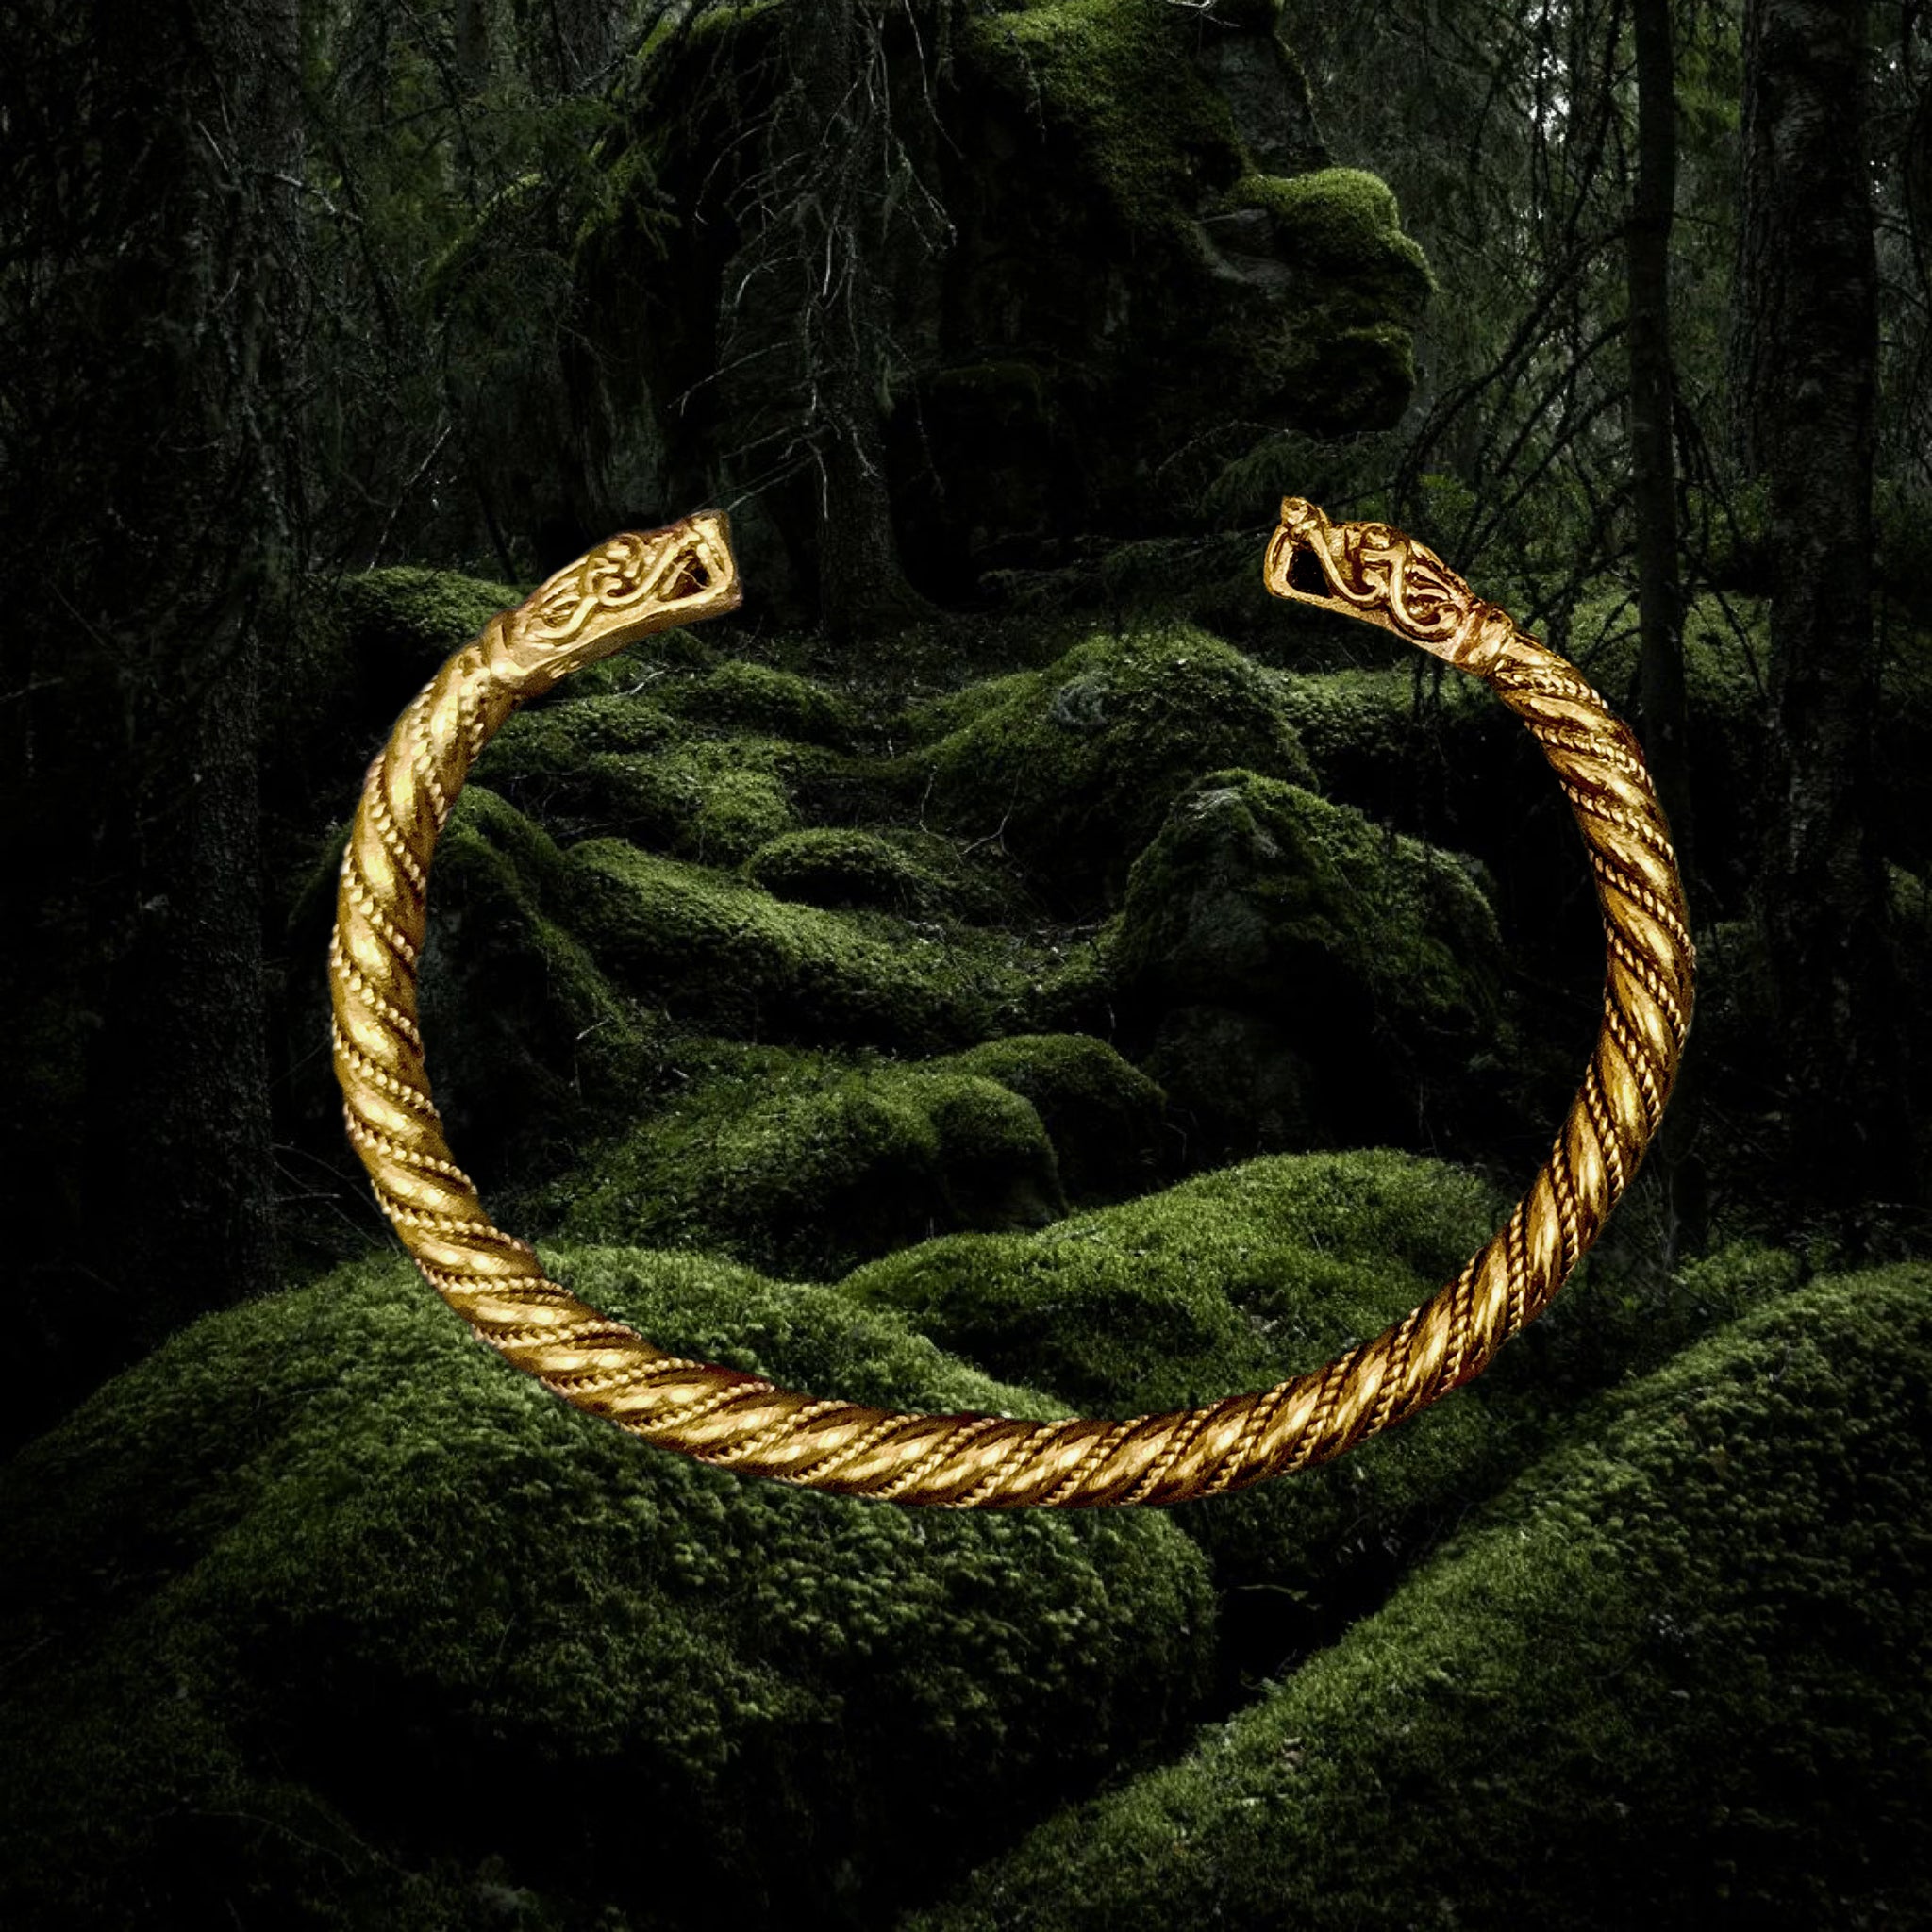 Handmade Twisted Bronze Bracelet With Gotlandic Dragon Heads - Medium Size